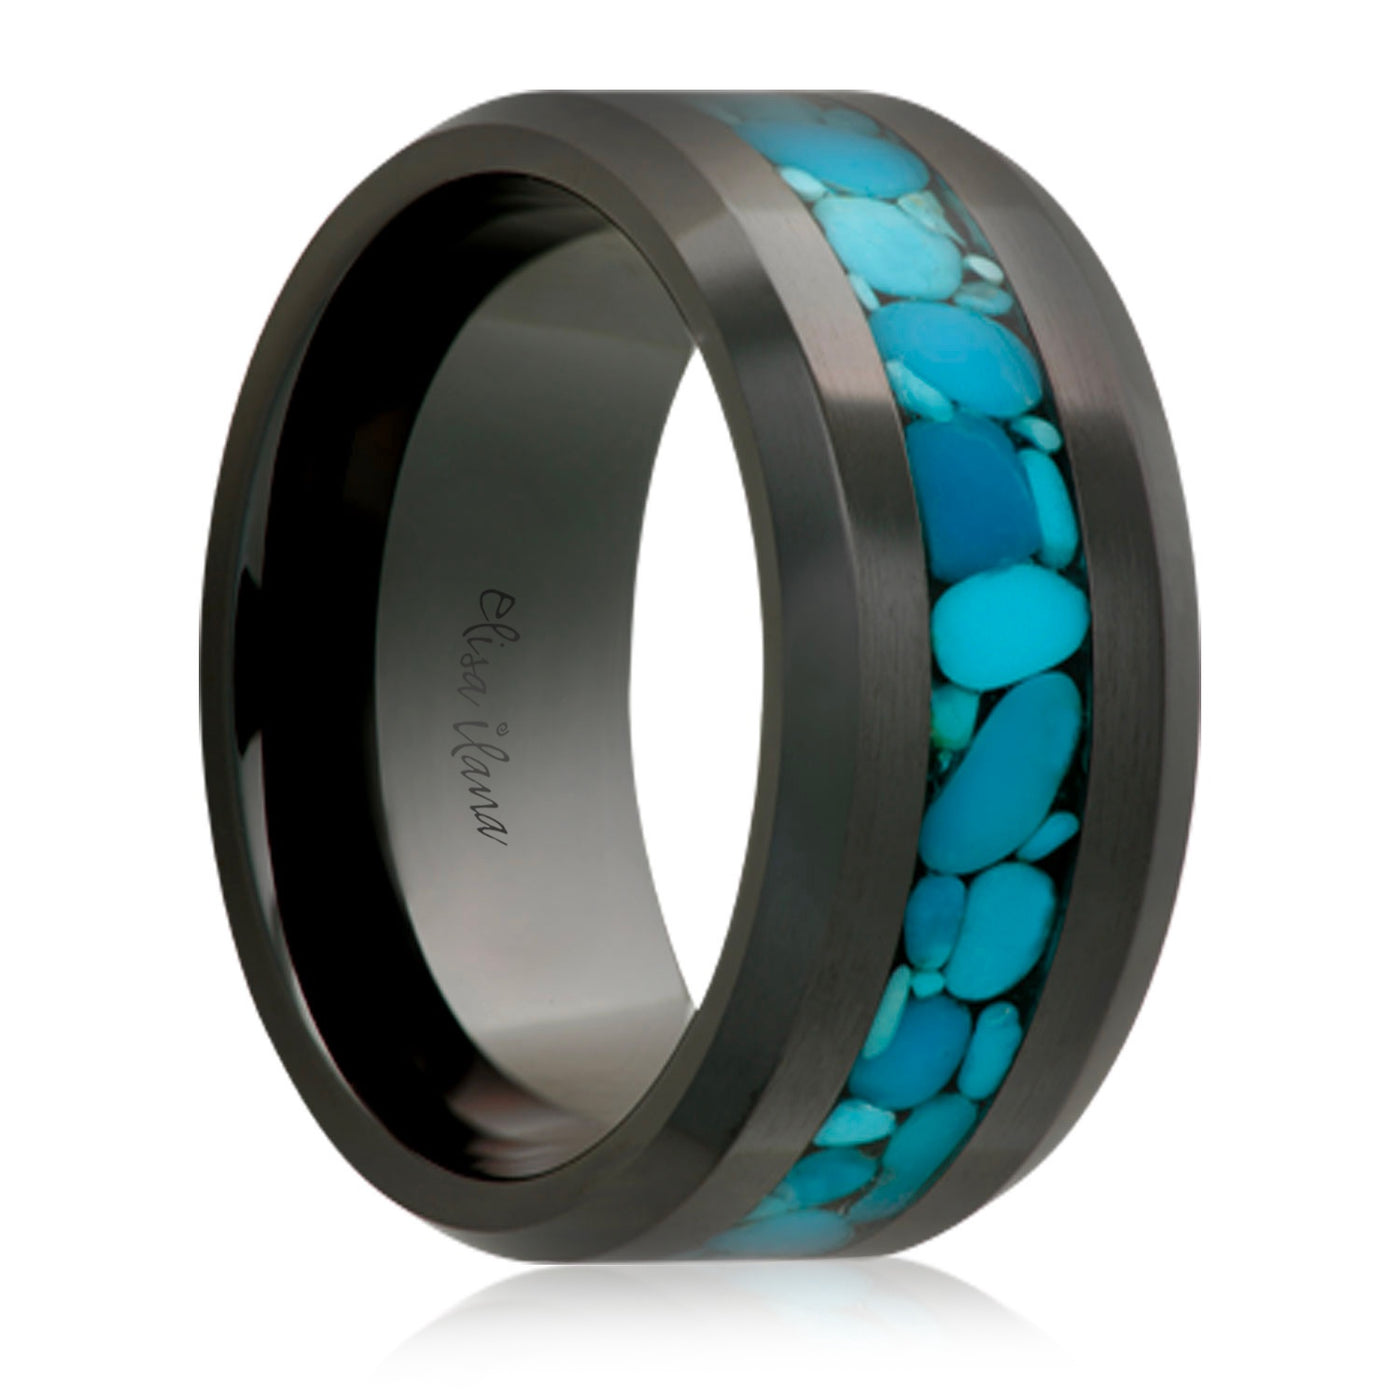 Black Ceramic Beveled Edge & Turquoise Ring